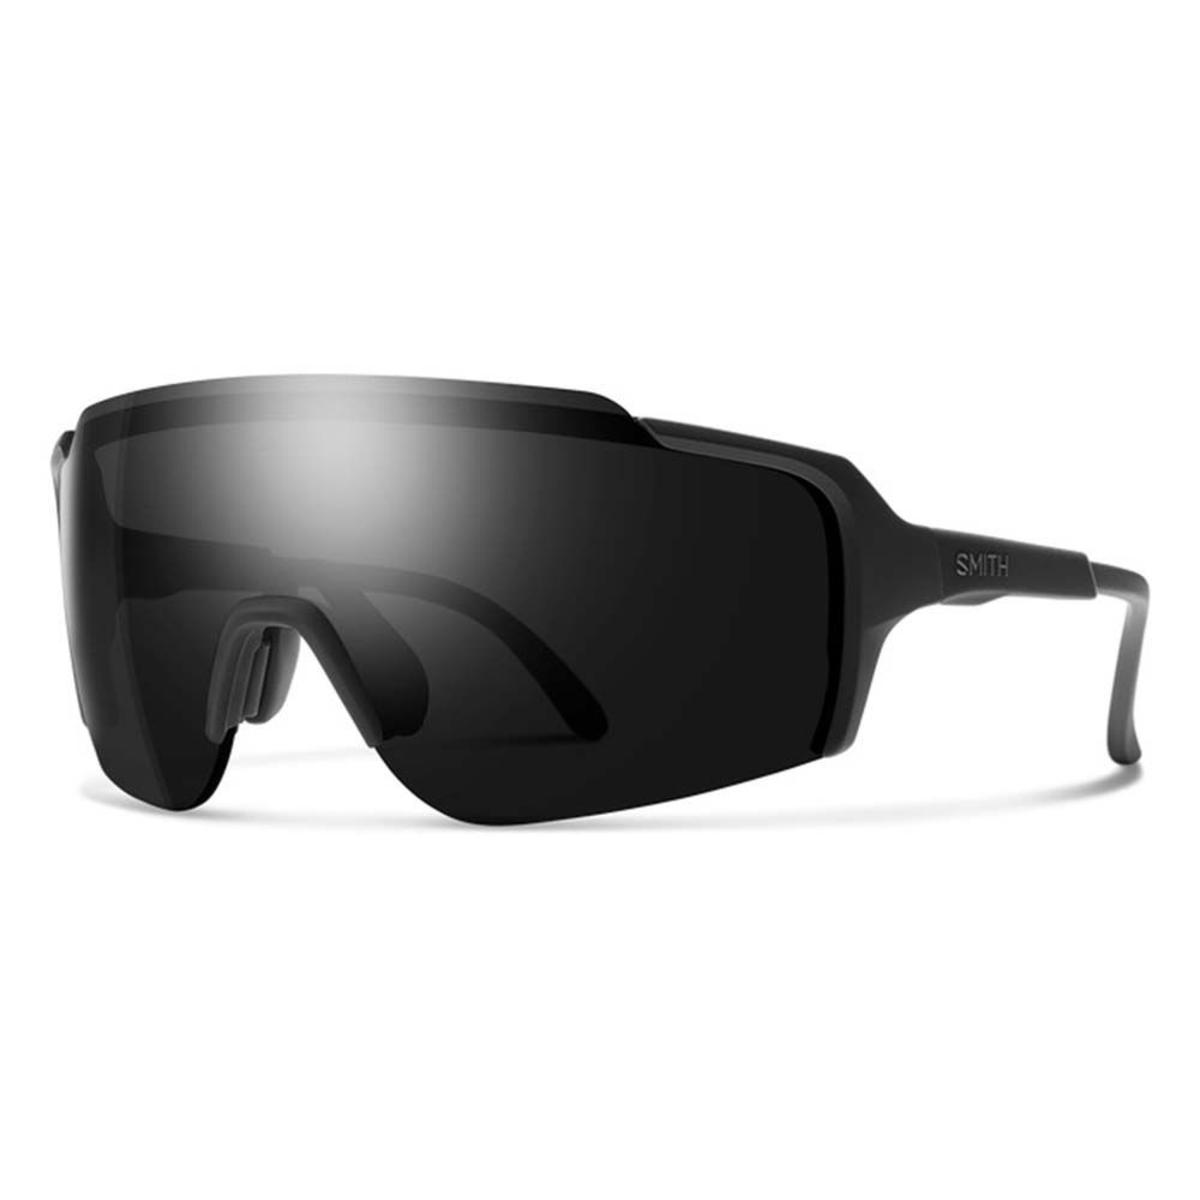 Smith Optics Flywheel Sunglasses ChromaPop Black - Matte Black Frame